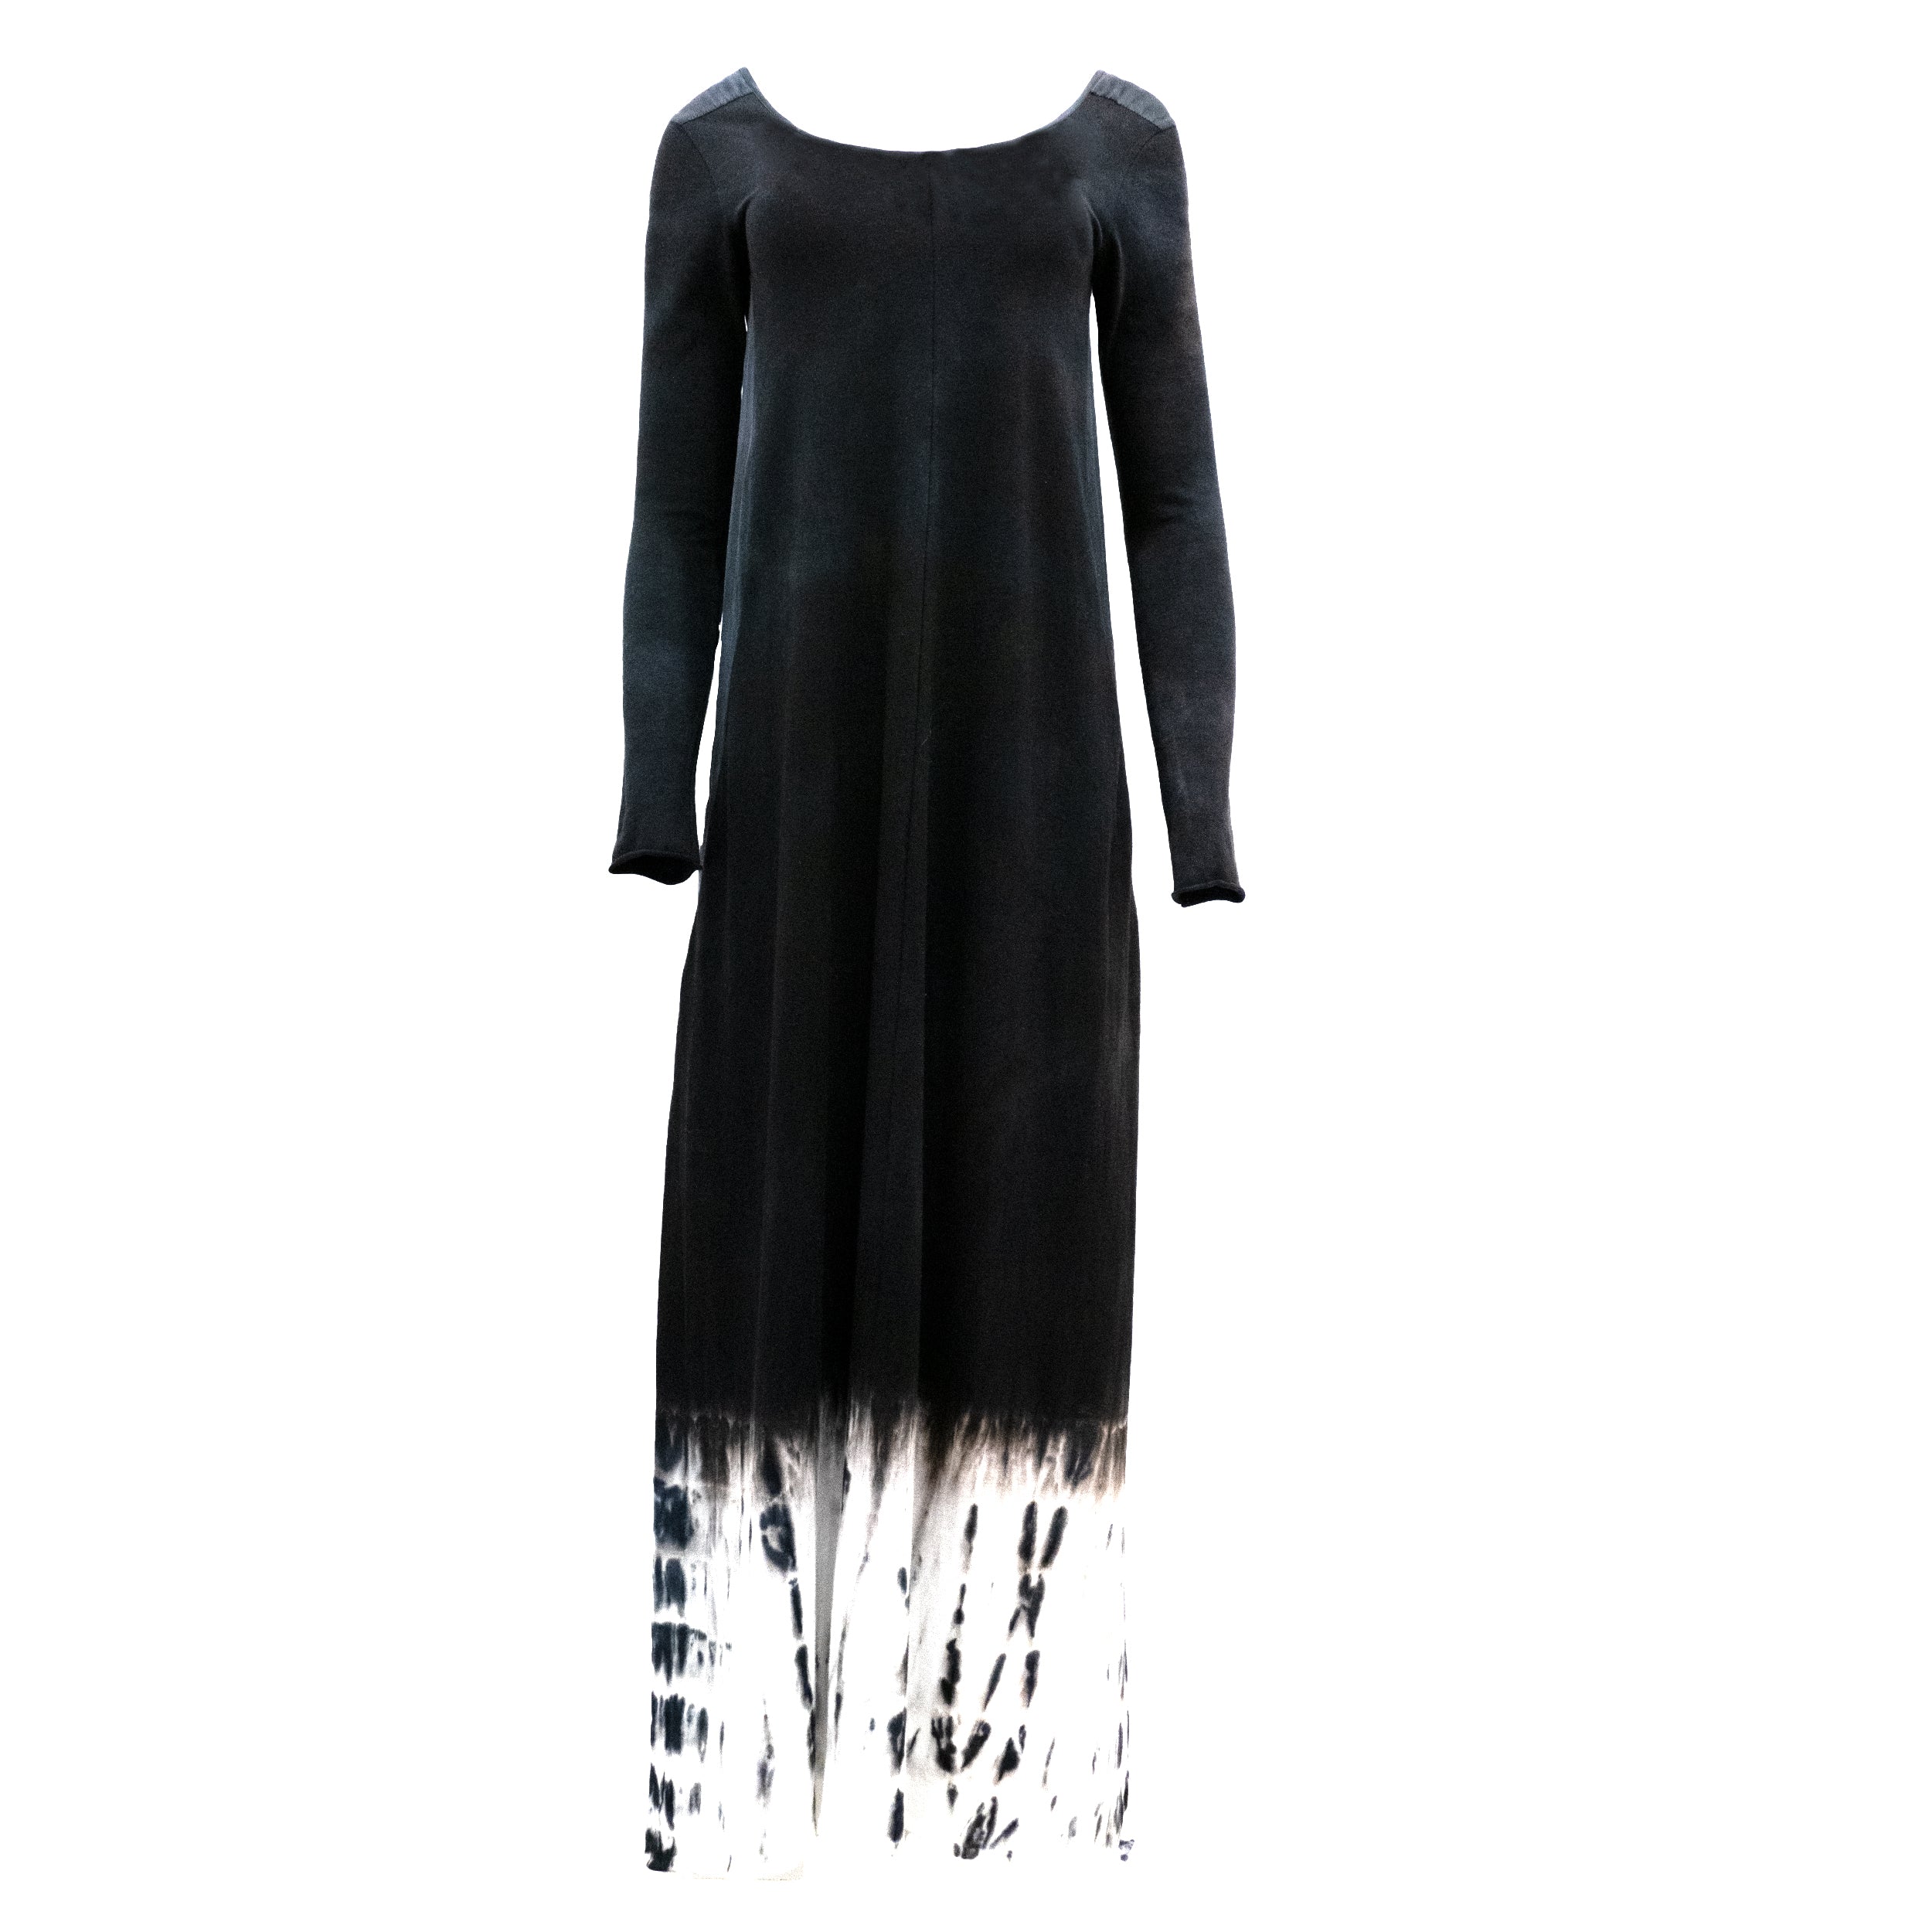 Gilda Midani Black Tie Dye Dress